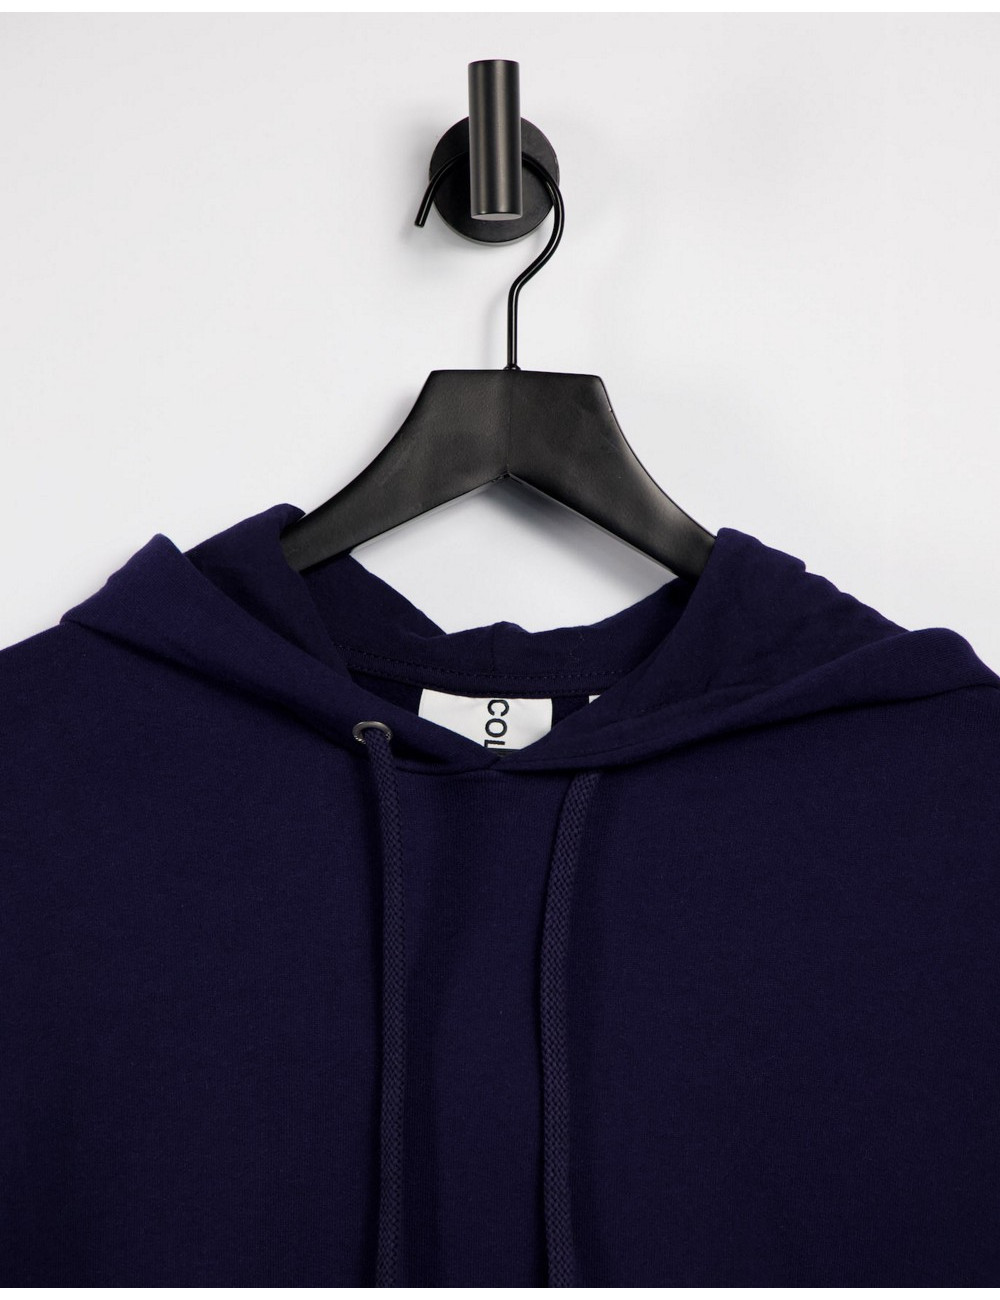 COLLUSION hoodie in dark blue